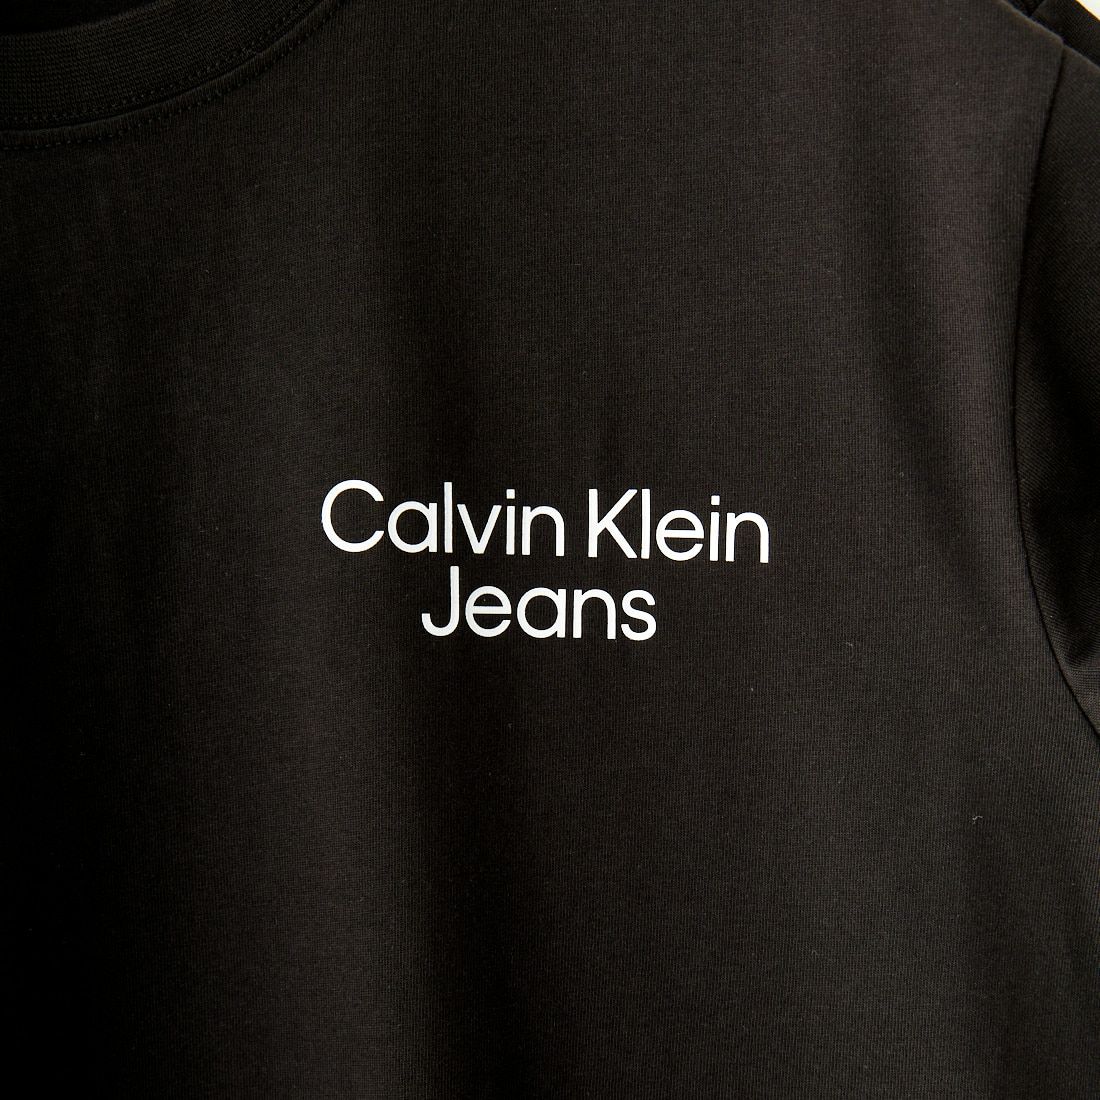 Calvin Klein [カルバンクライン] エクリプスグラフィックTシャツ [J325186]